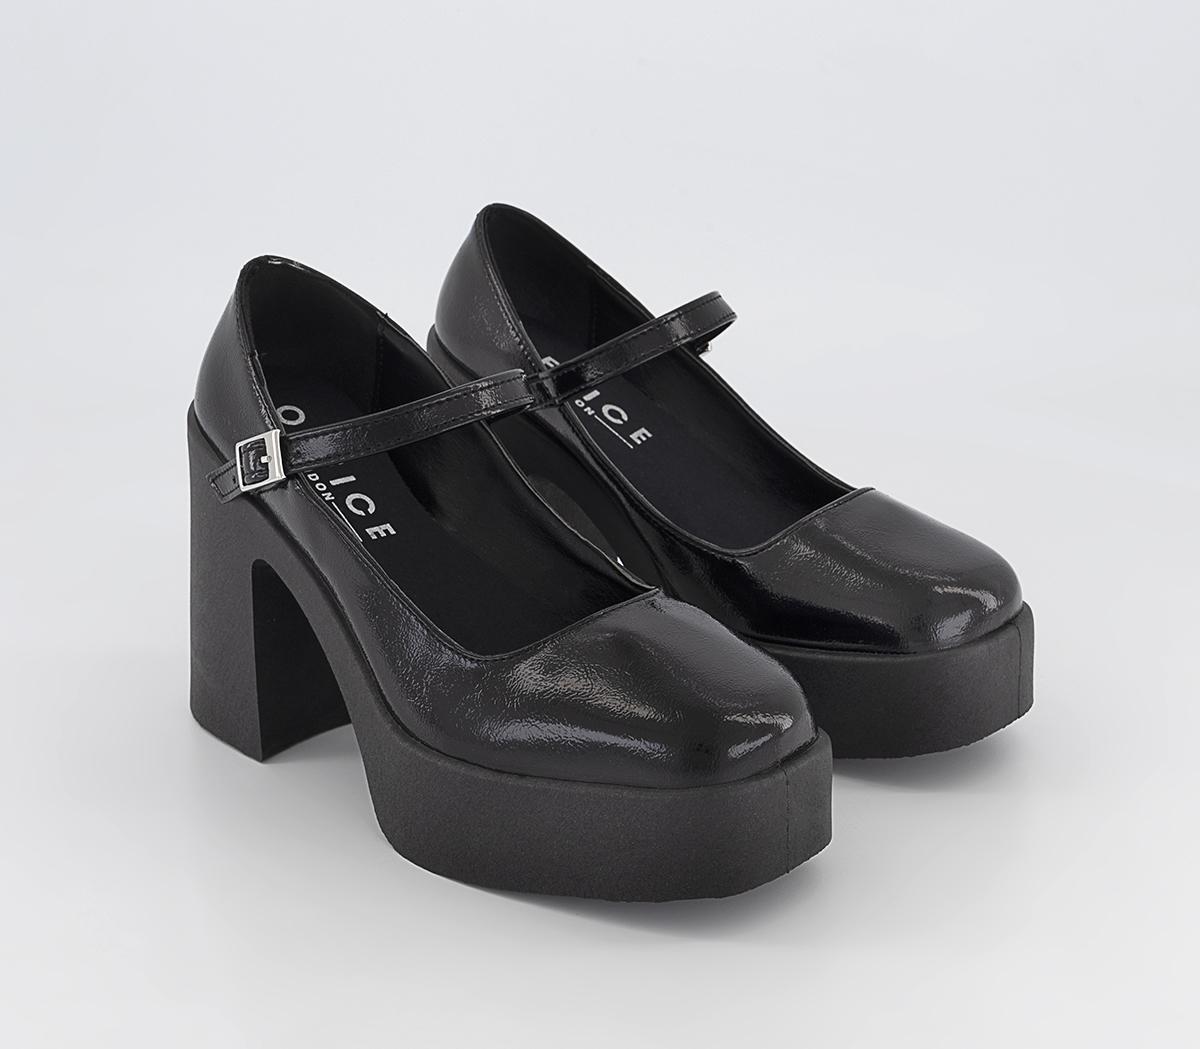 OFFICE Madison Platform Mary Jane Shoes Black - Heels